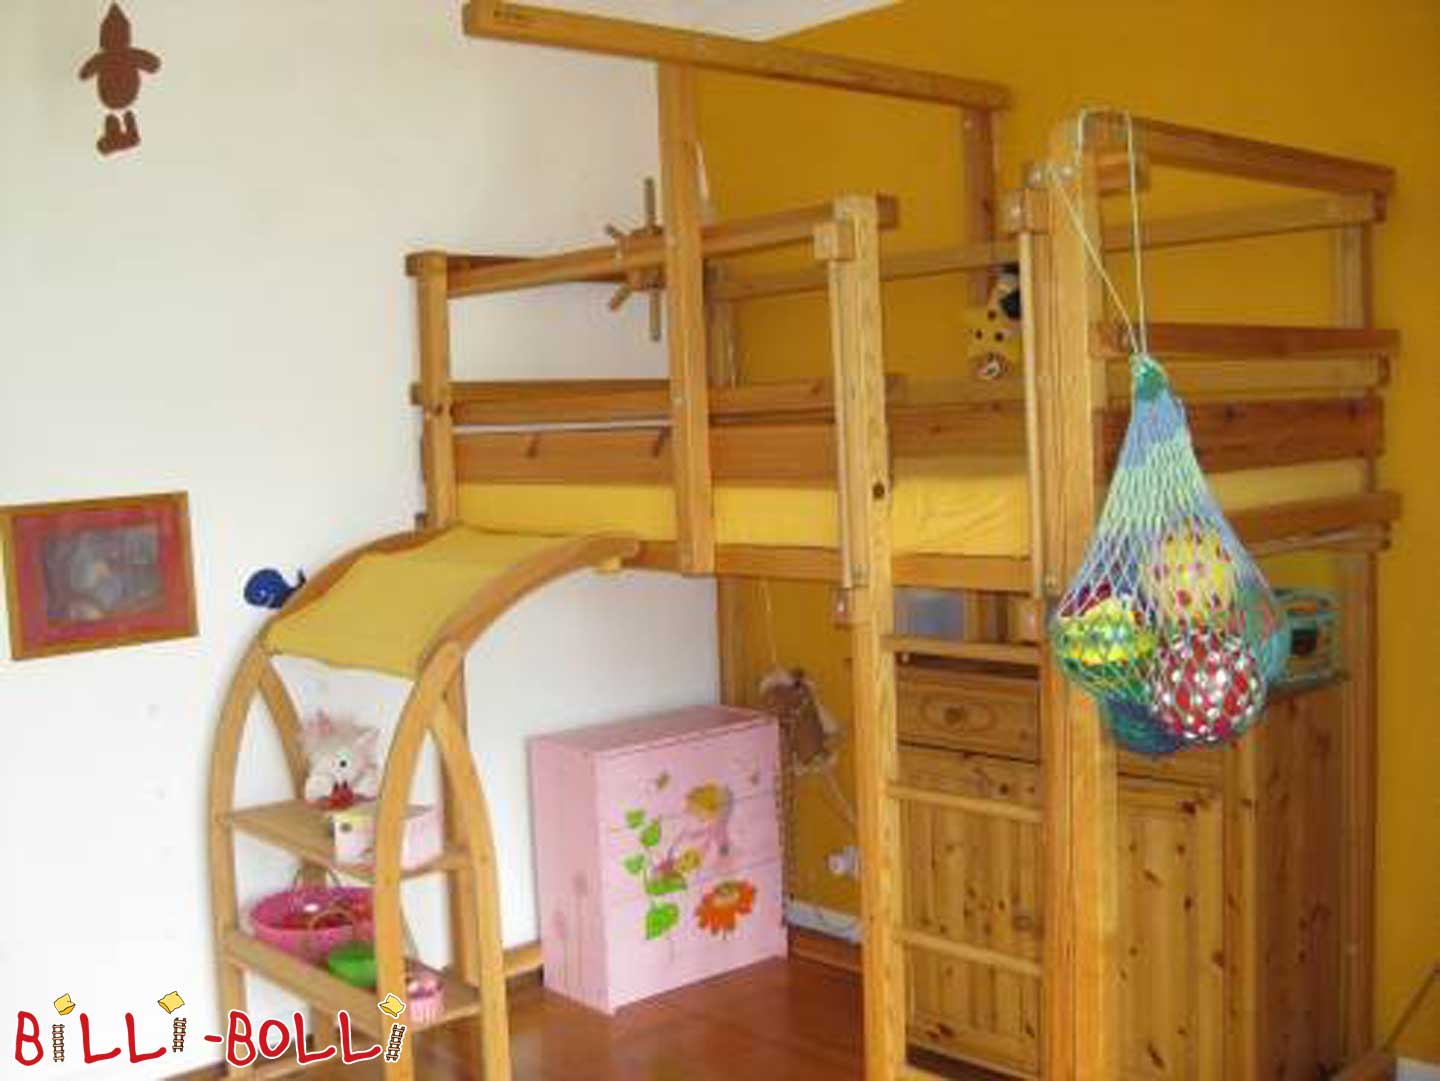 Original Billi-Bolli pirate loft bed (growing loft bed) (Category: second hand loft bed)